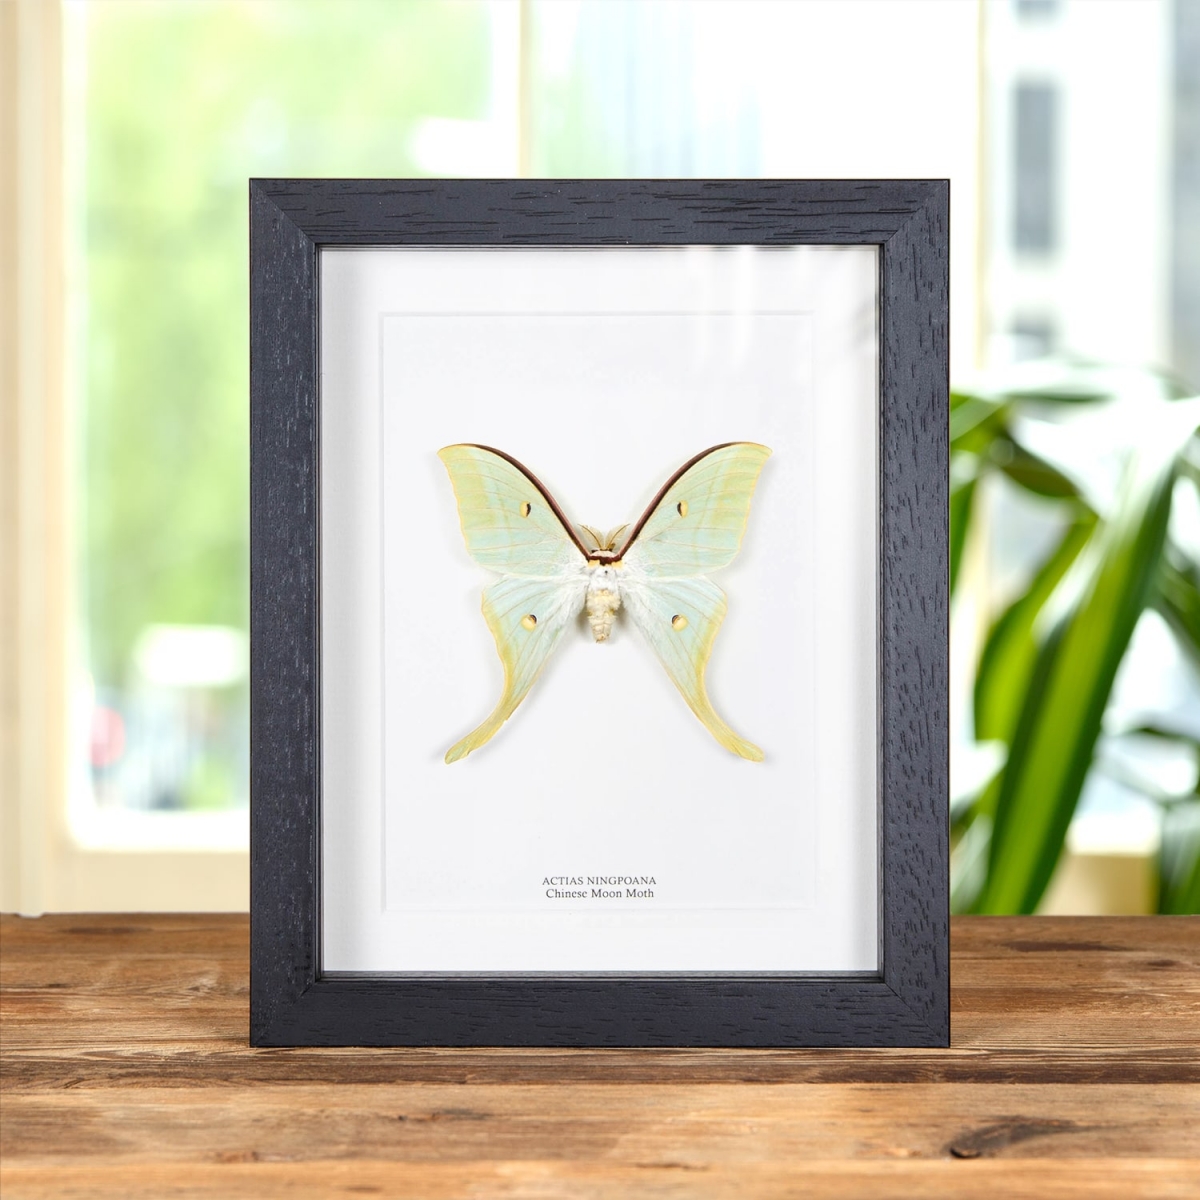 Minibeast Chinese Moon Moth in Box Frame (Actias ningpoana)